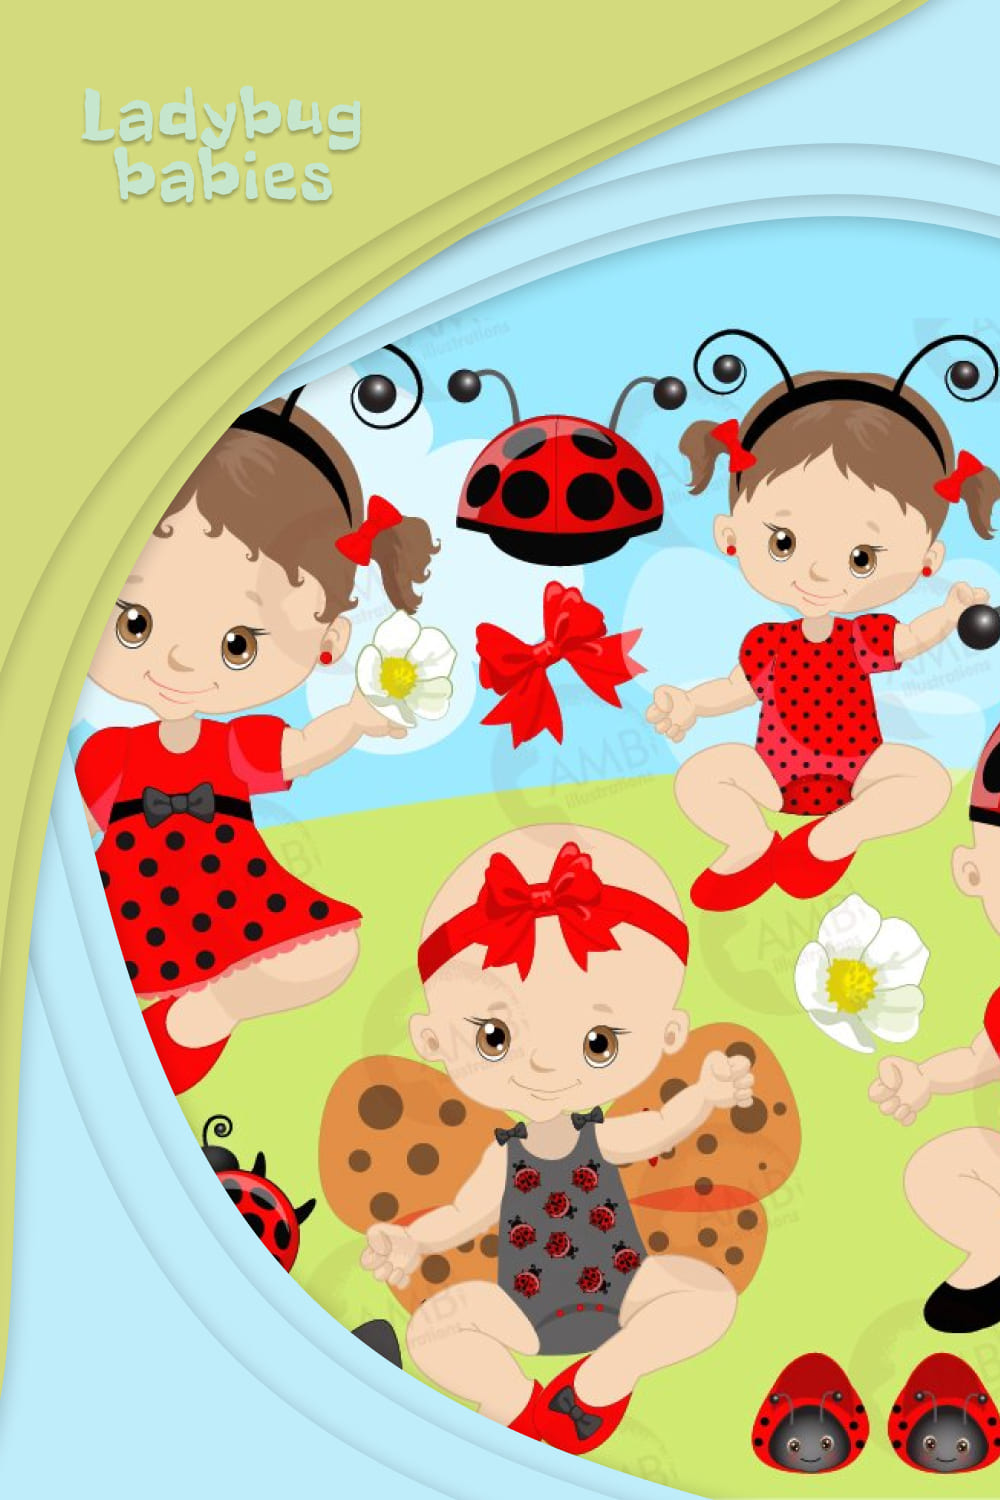 Ladybug babies - pinterest image preview.